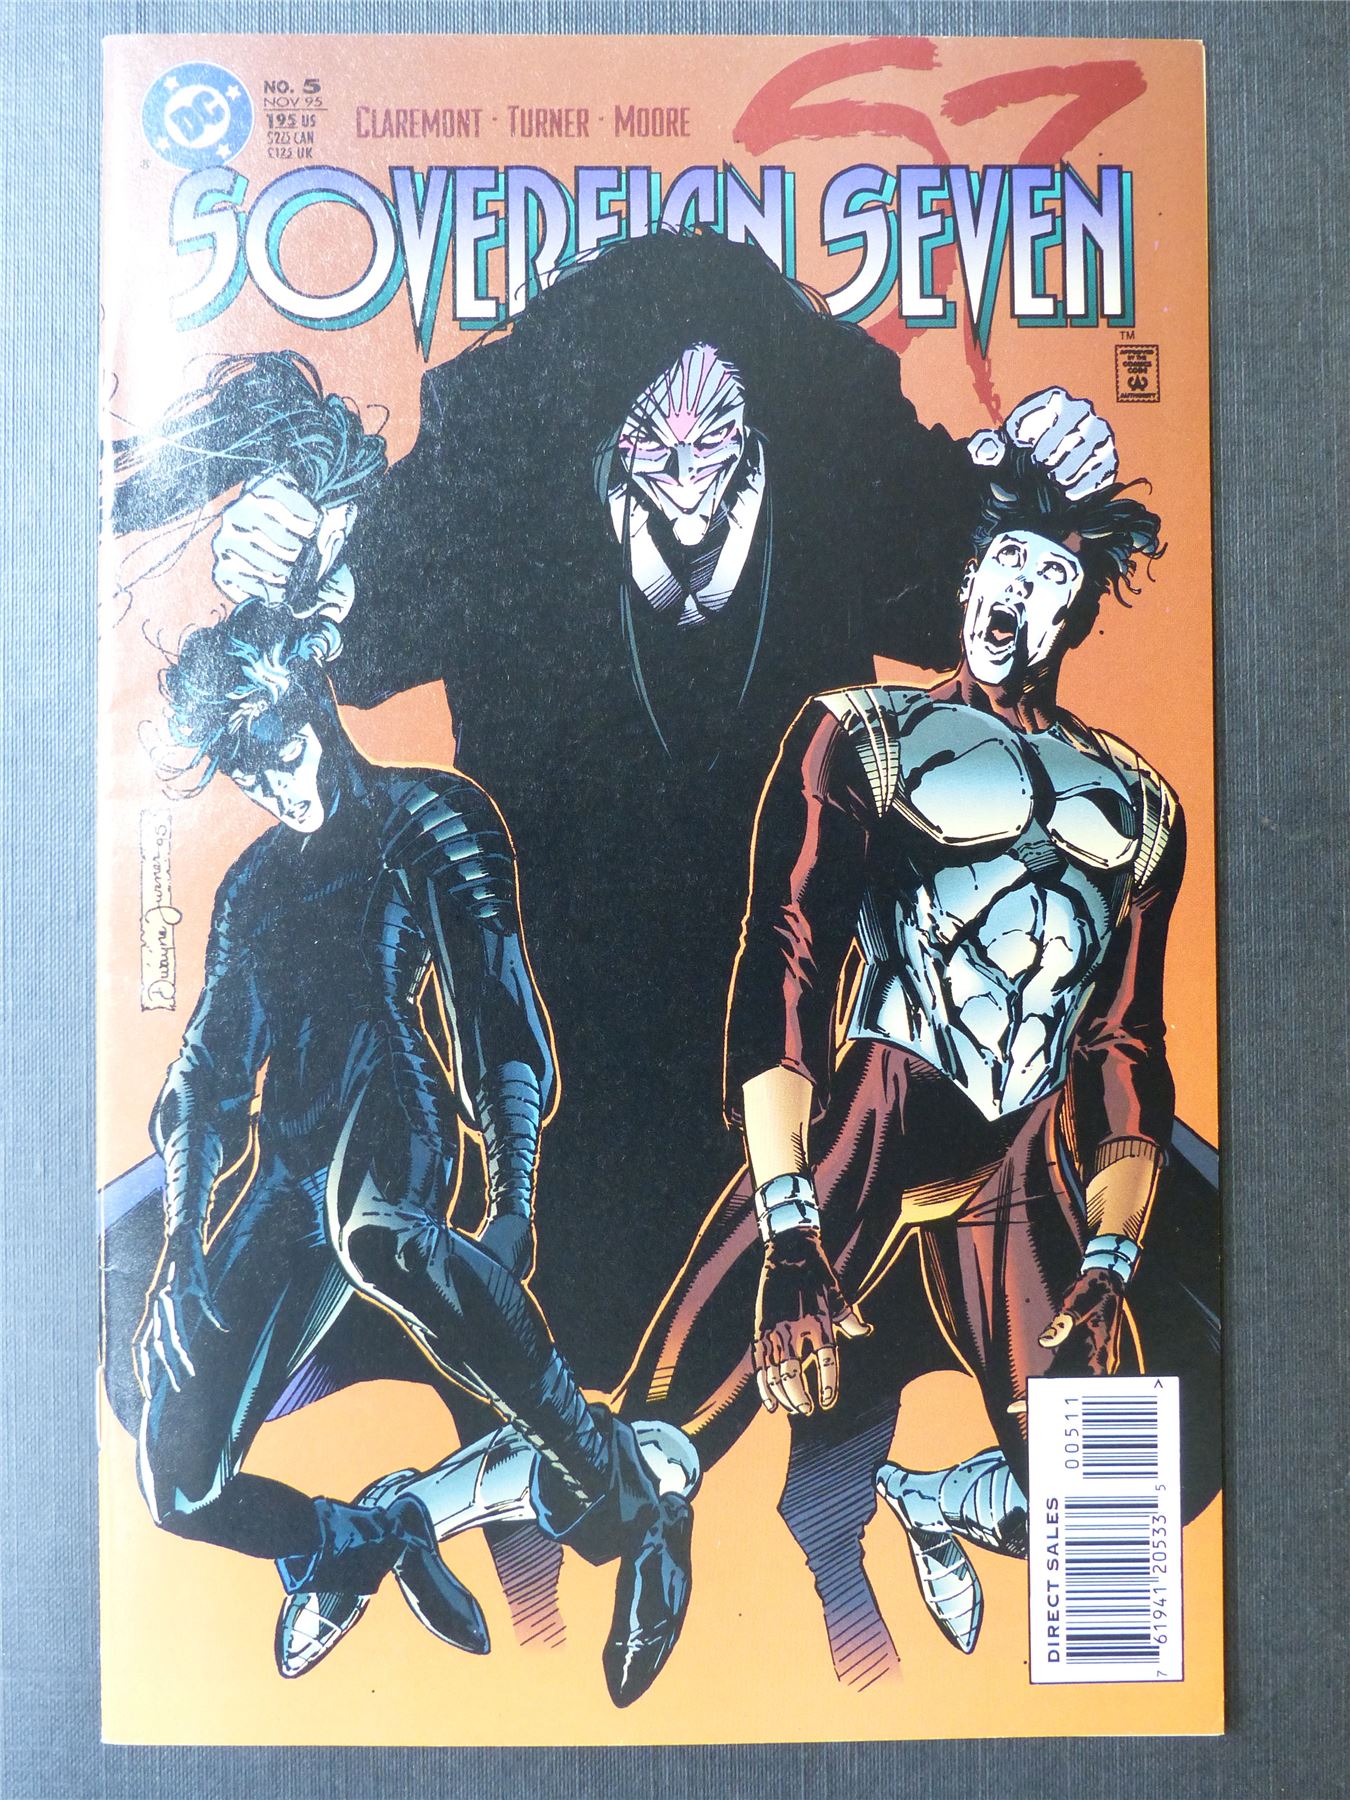 SOVEREIGN Seven #5 - DC Comics #5GS